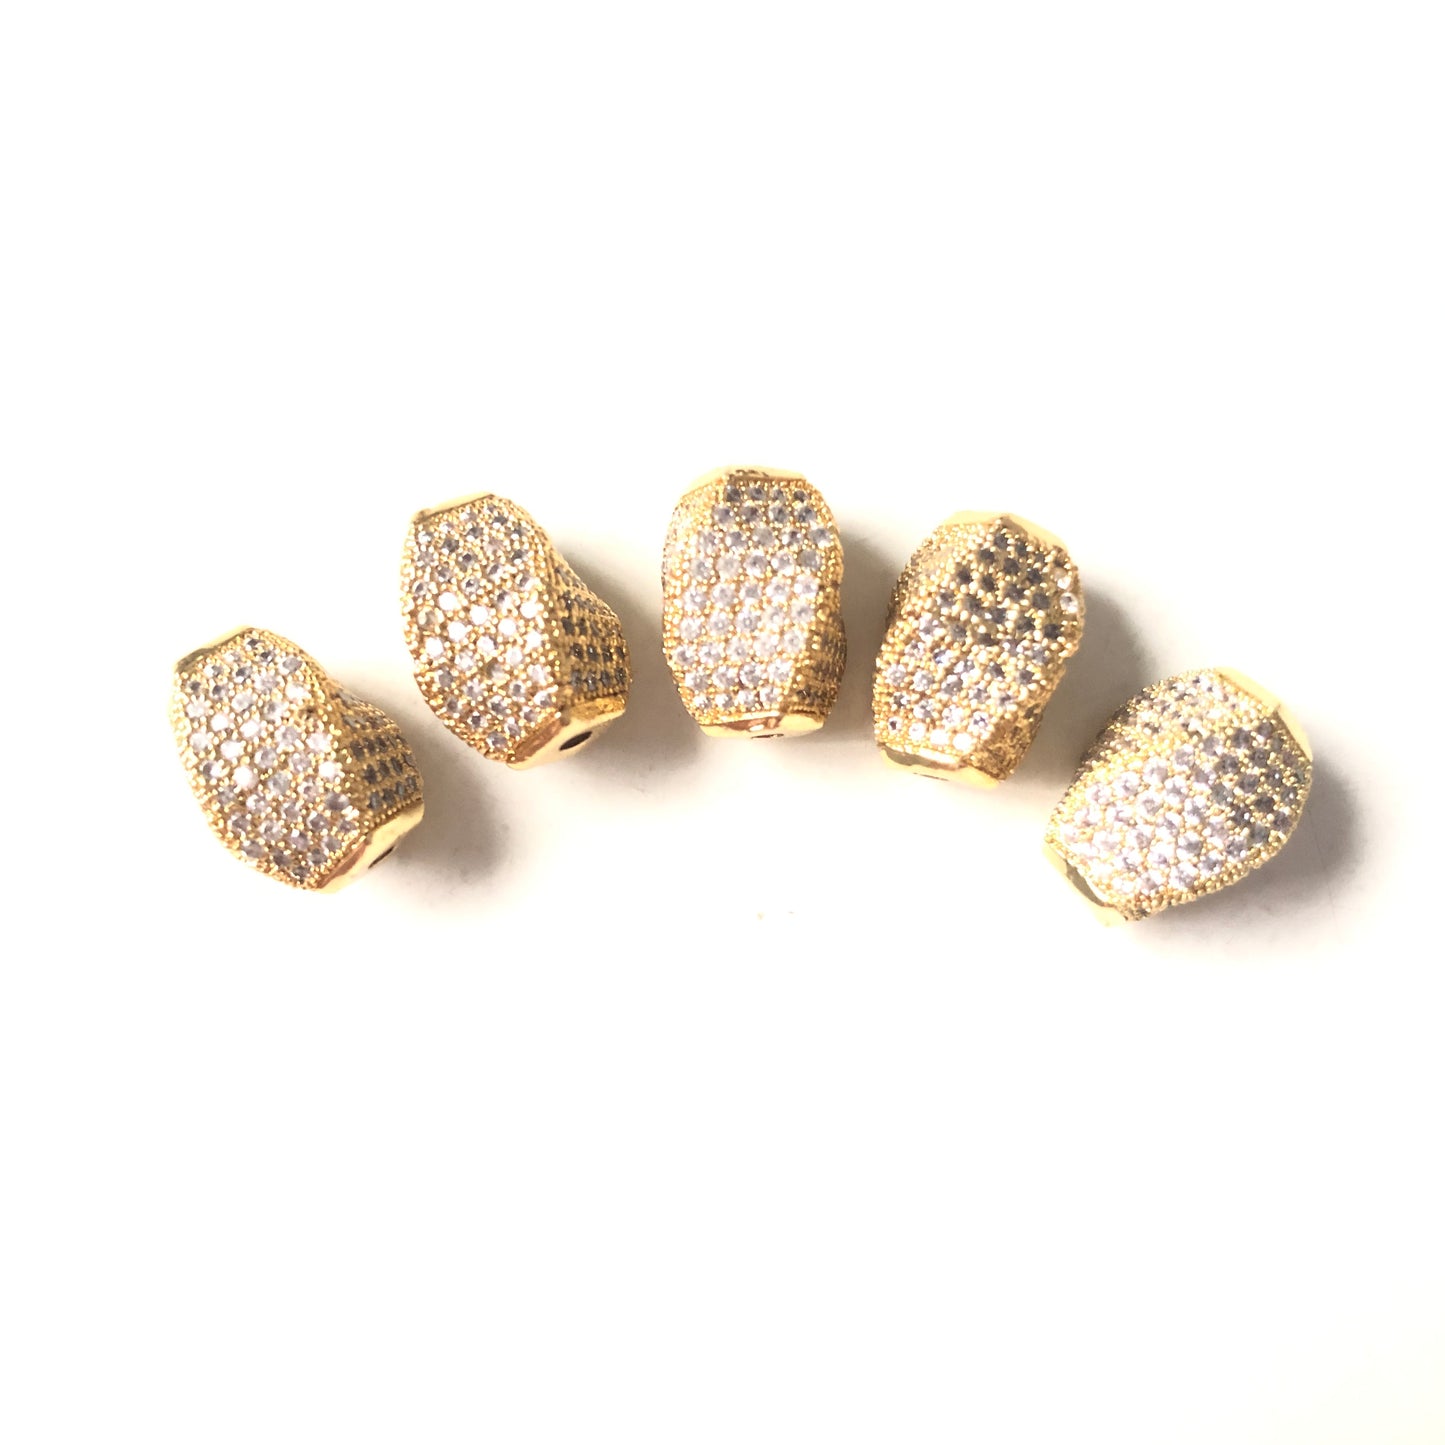 10pcs/lot 12*14mm CZ Paved Spiral Tube Rondelle Spacers Gold CZ Paved Spacers Rondelle Beads Charms Beads Beyond